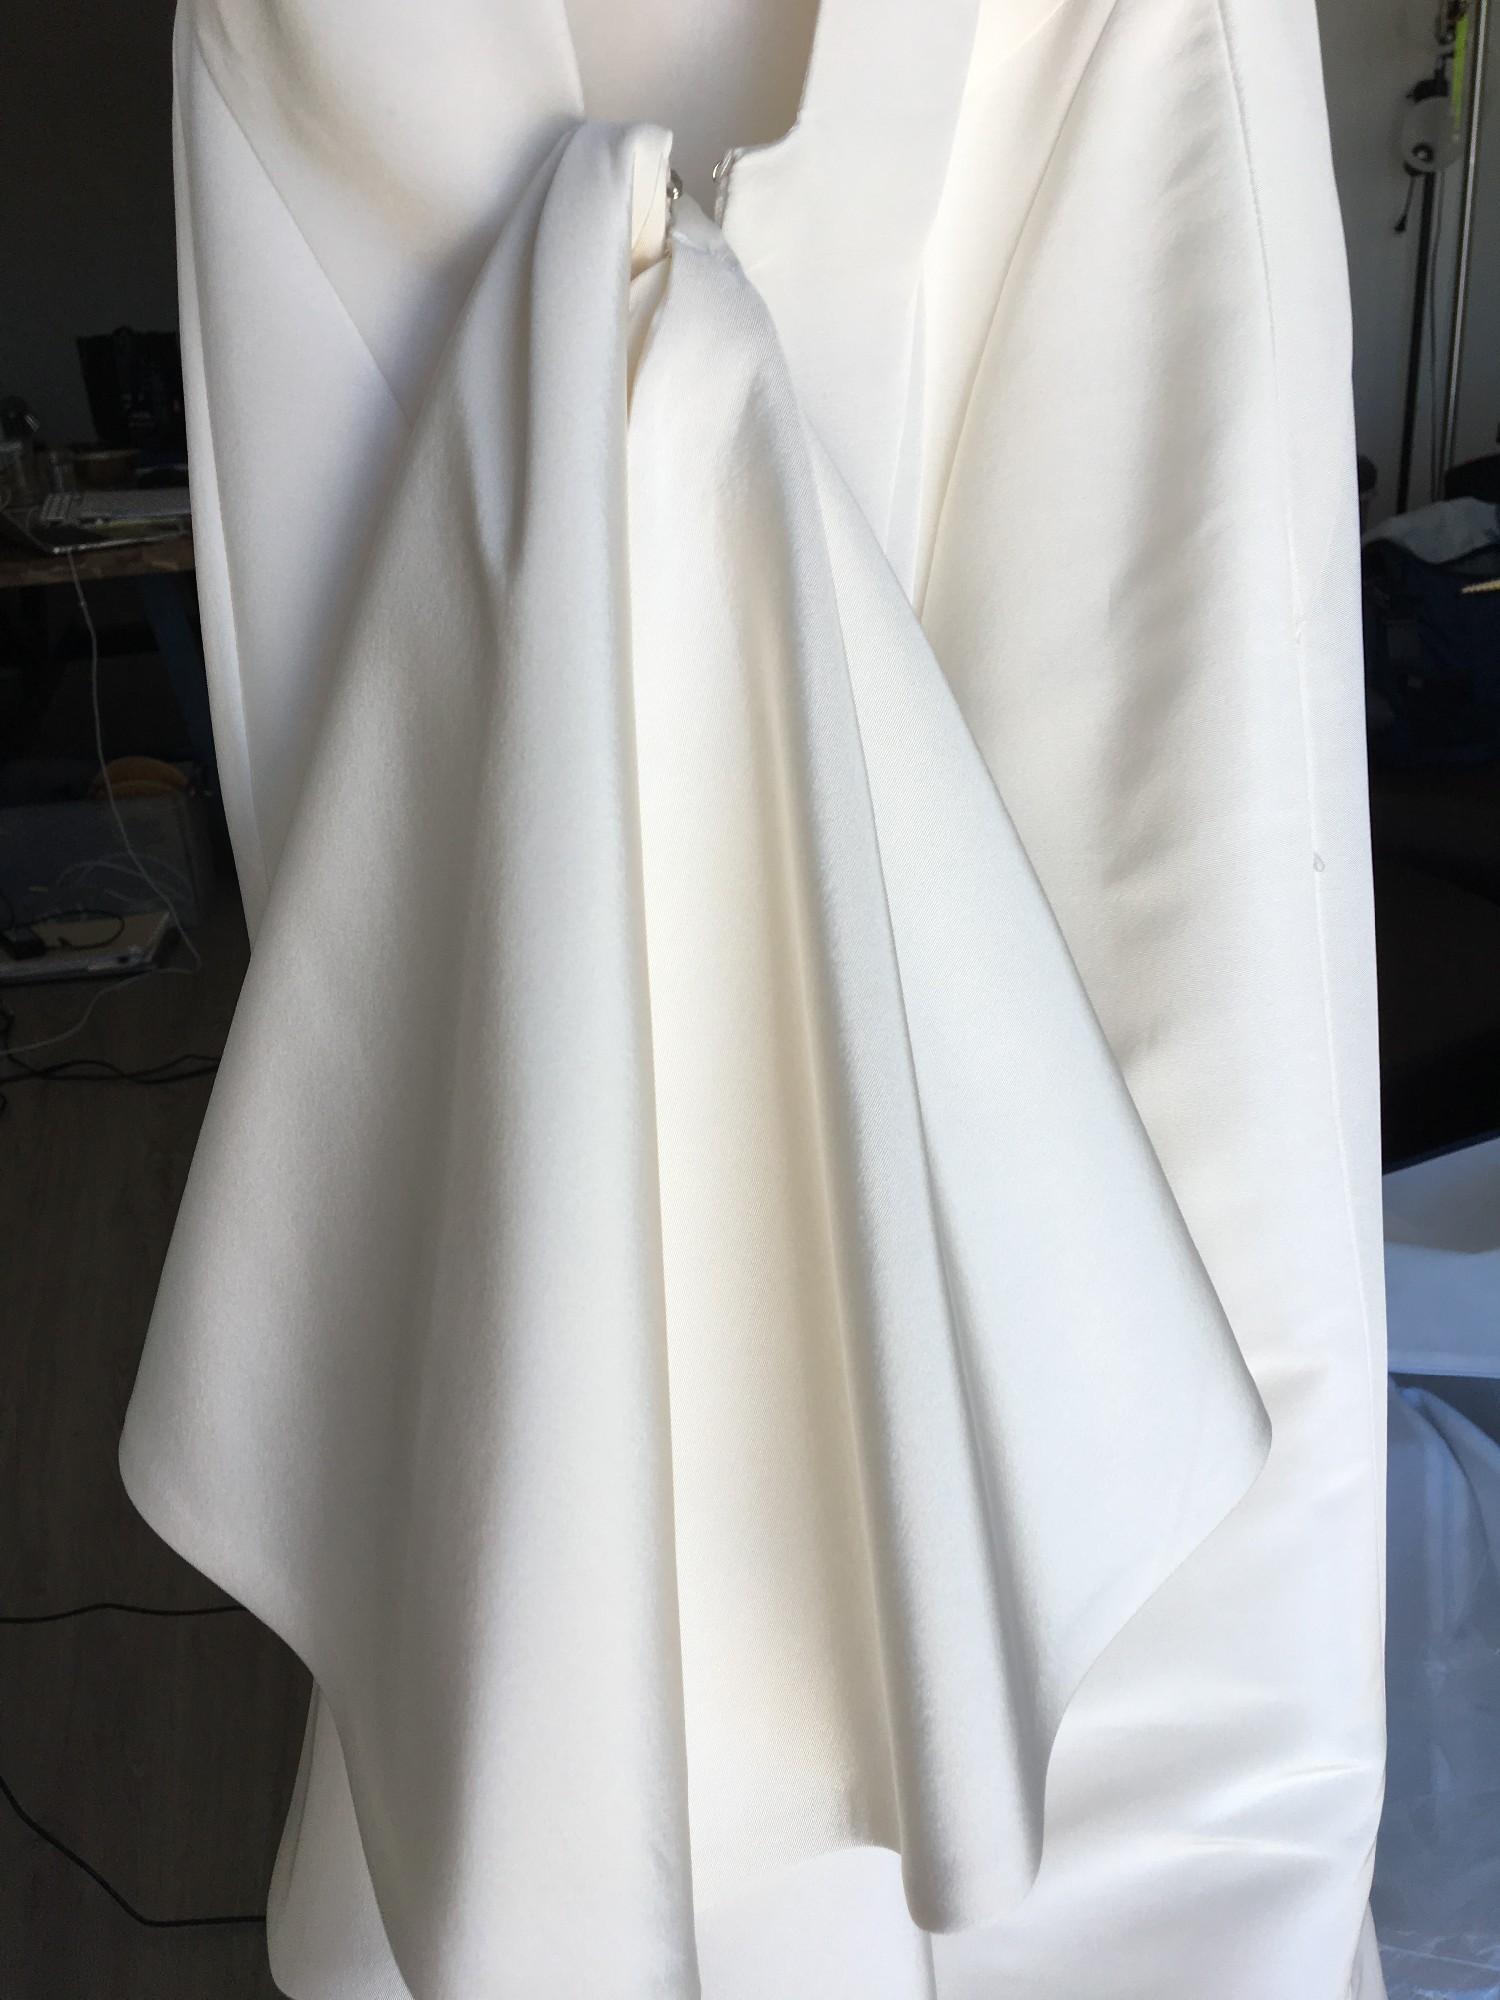 Oscar de la Renta Bridal Spring 2018 Landon with veil New Wedding Dress ...